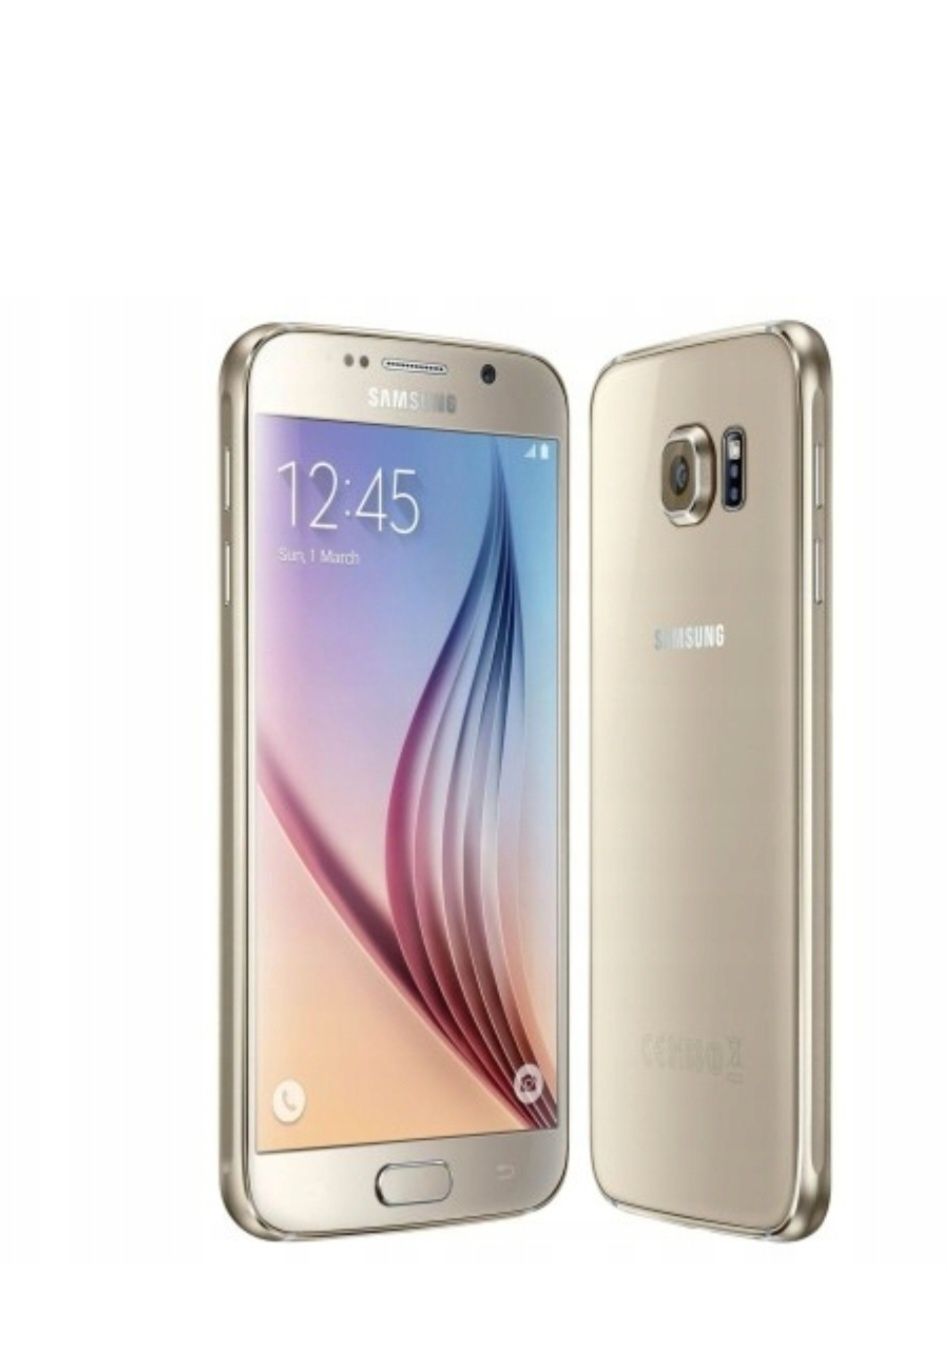 Samsung Galaxy S6 32g złoty